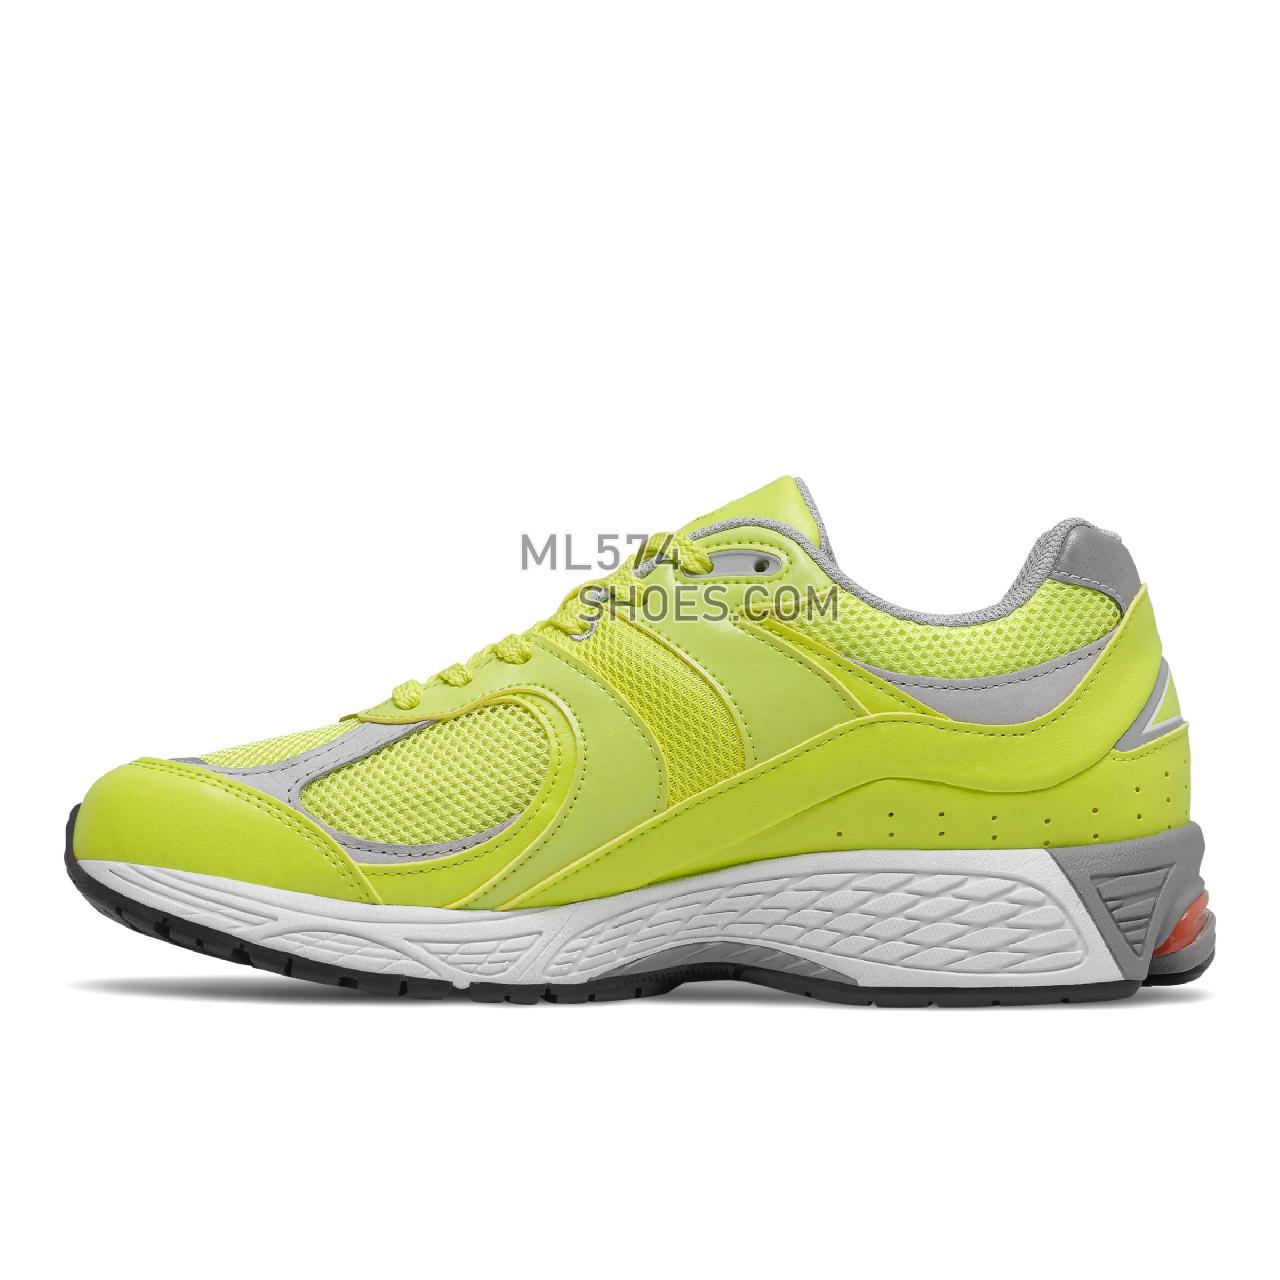 New Balance 2002R - Men's Sport Style Sneakers - Sulphur Yellow with Silver Metallic - M2002RLC